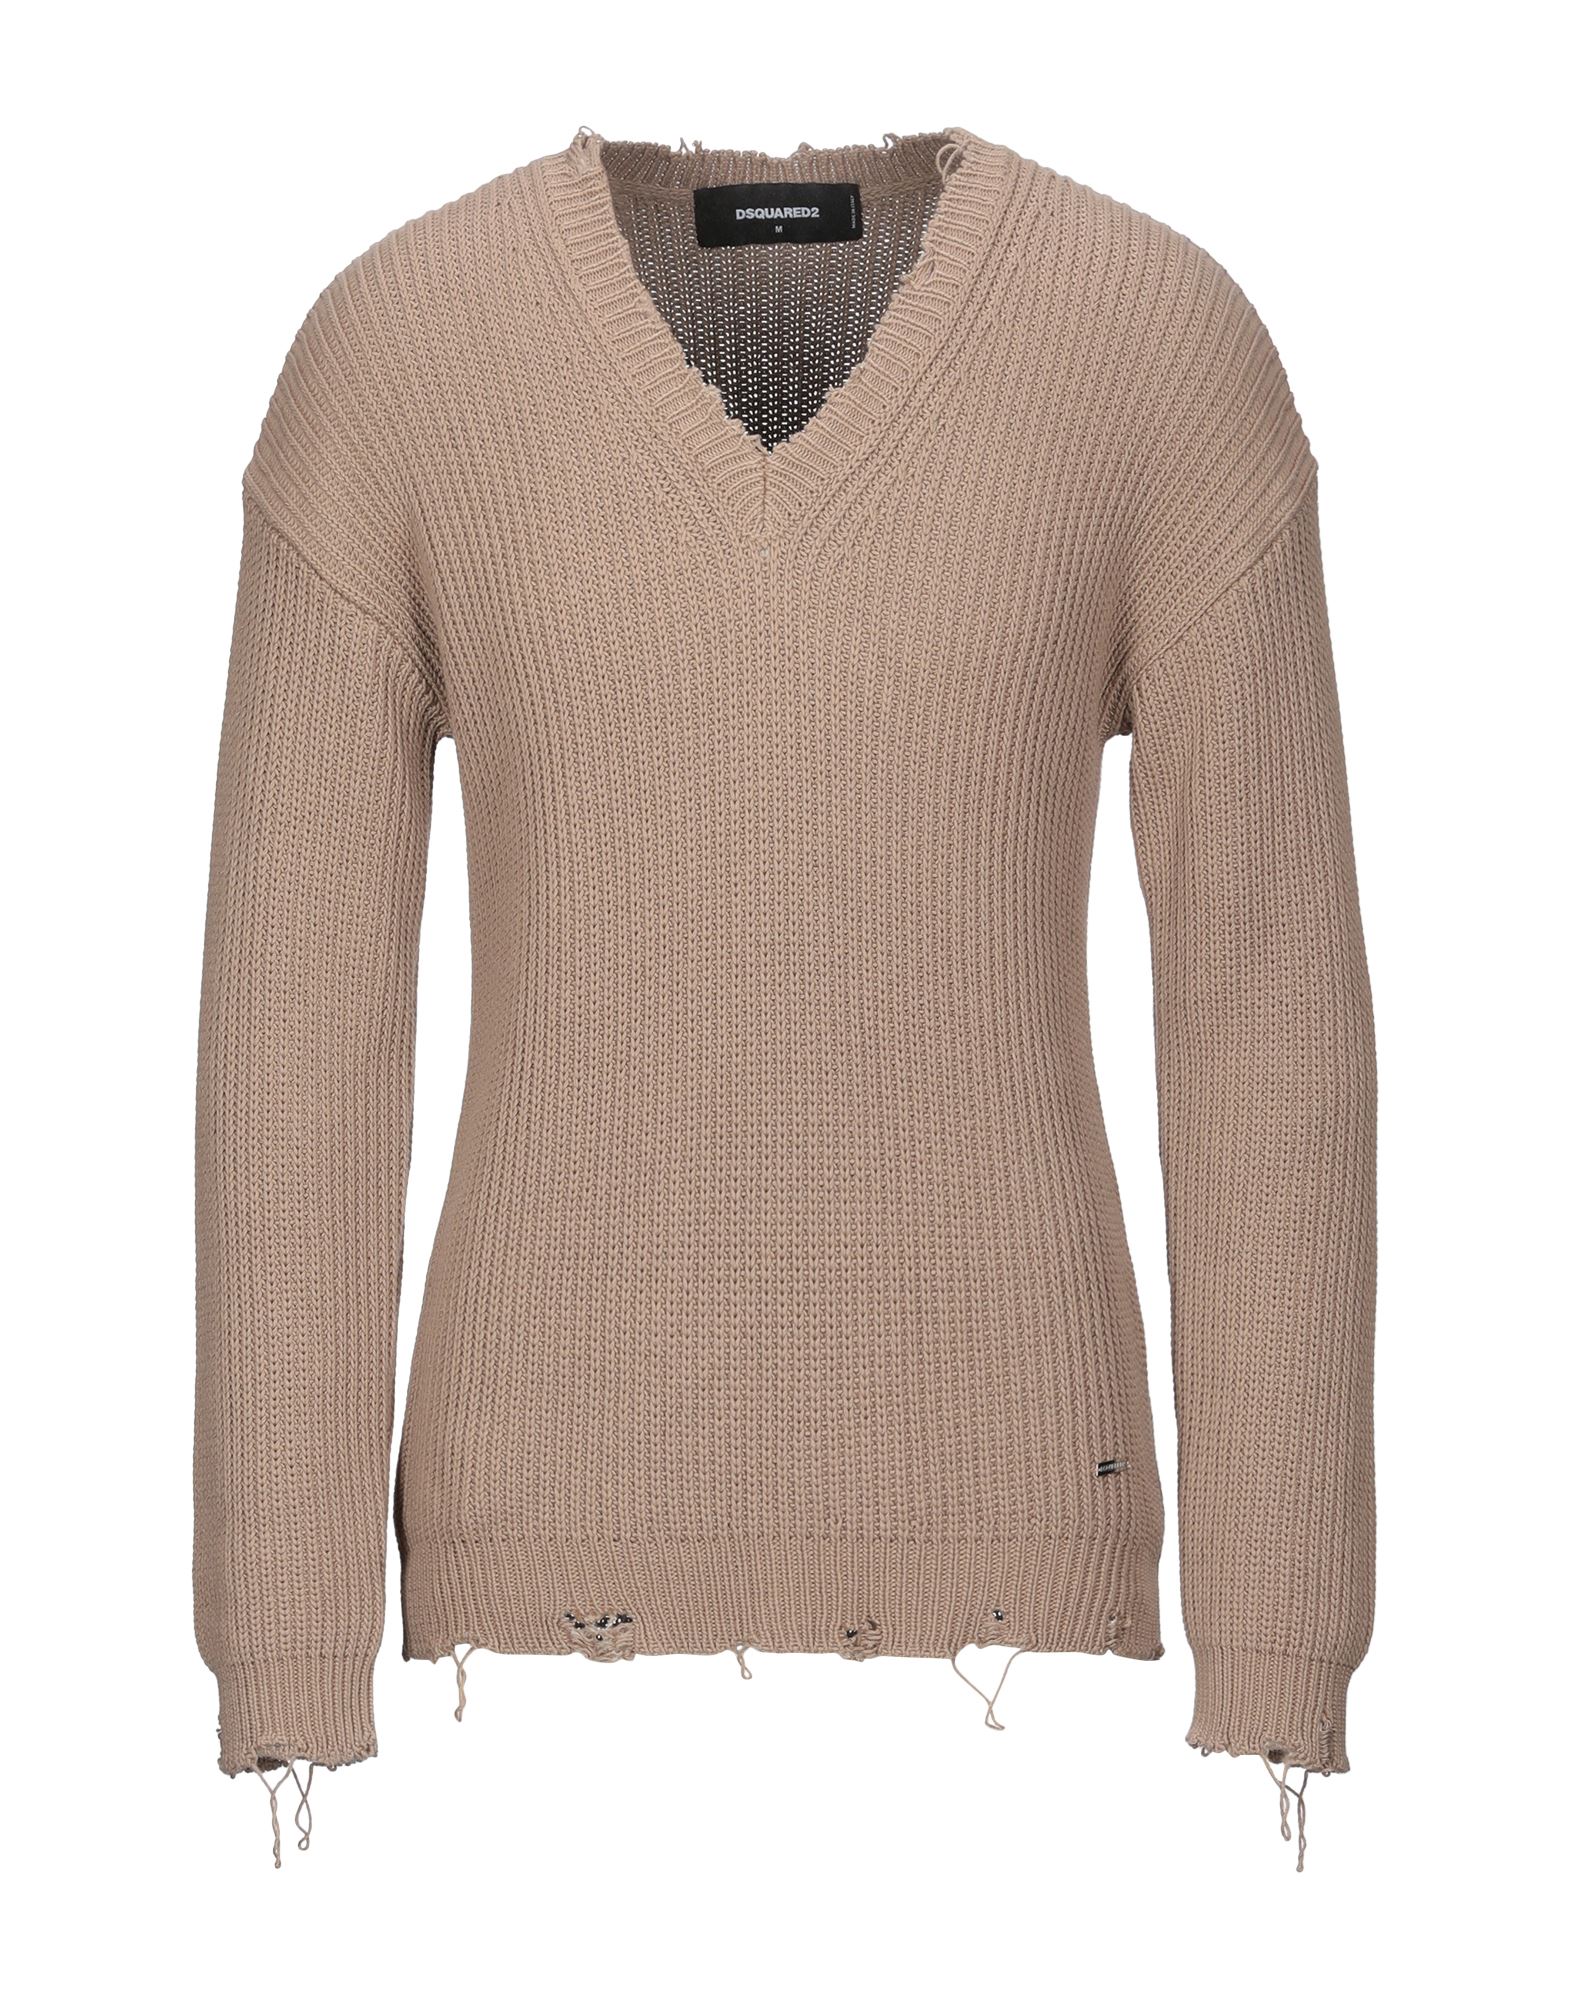 DSQUARED2 Sweaters - Item 14090483